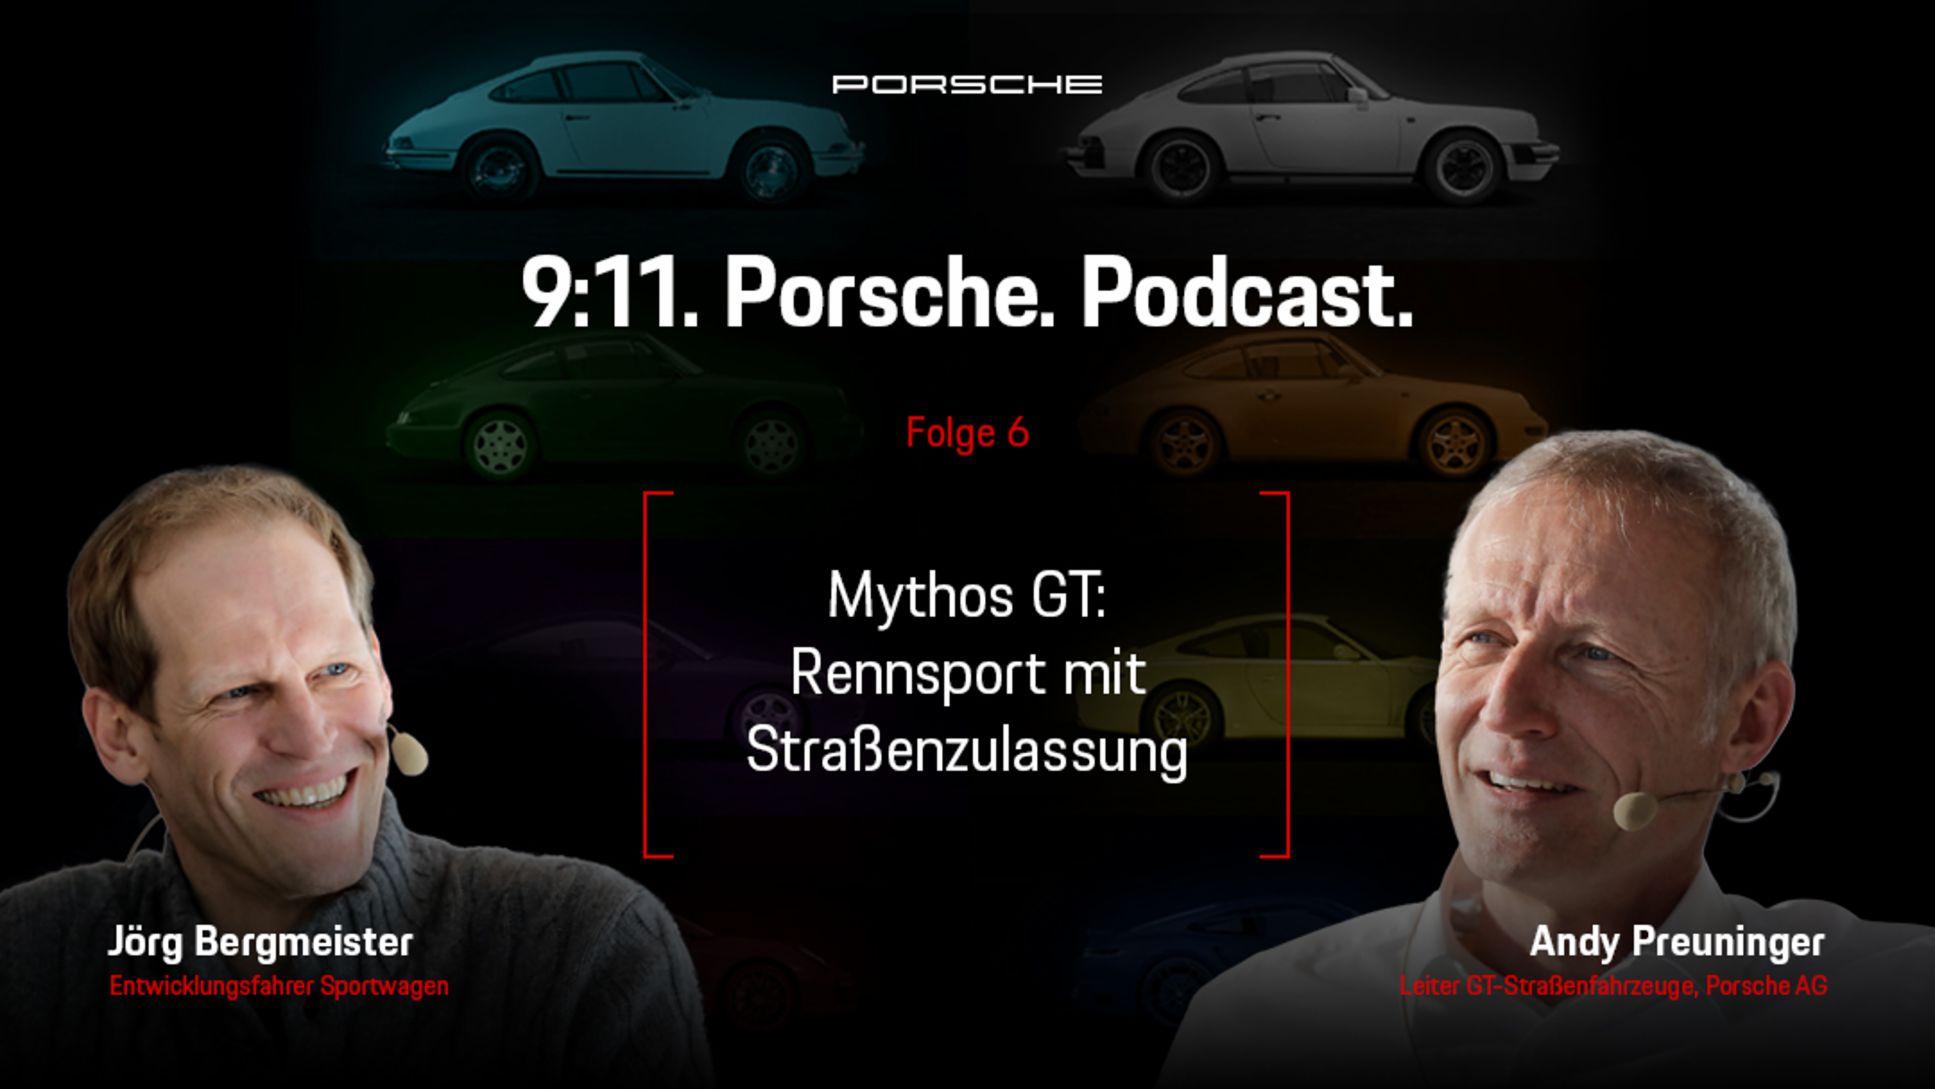 Jörg Bergmeister, Entwicklungsfahrer Sportwagen und Porsche-Markenbotschafter, Andreas Preuninger, Leiter GT Straßenfahrzeuge, l-r, Podcast 9:11, Folge 6, 2021, Porsche AG